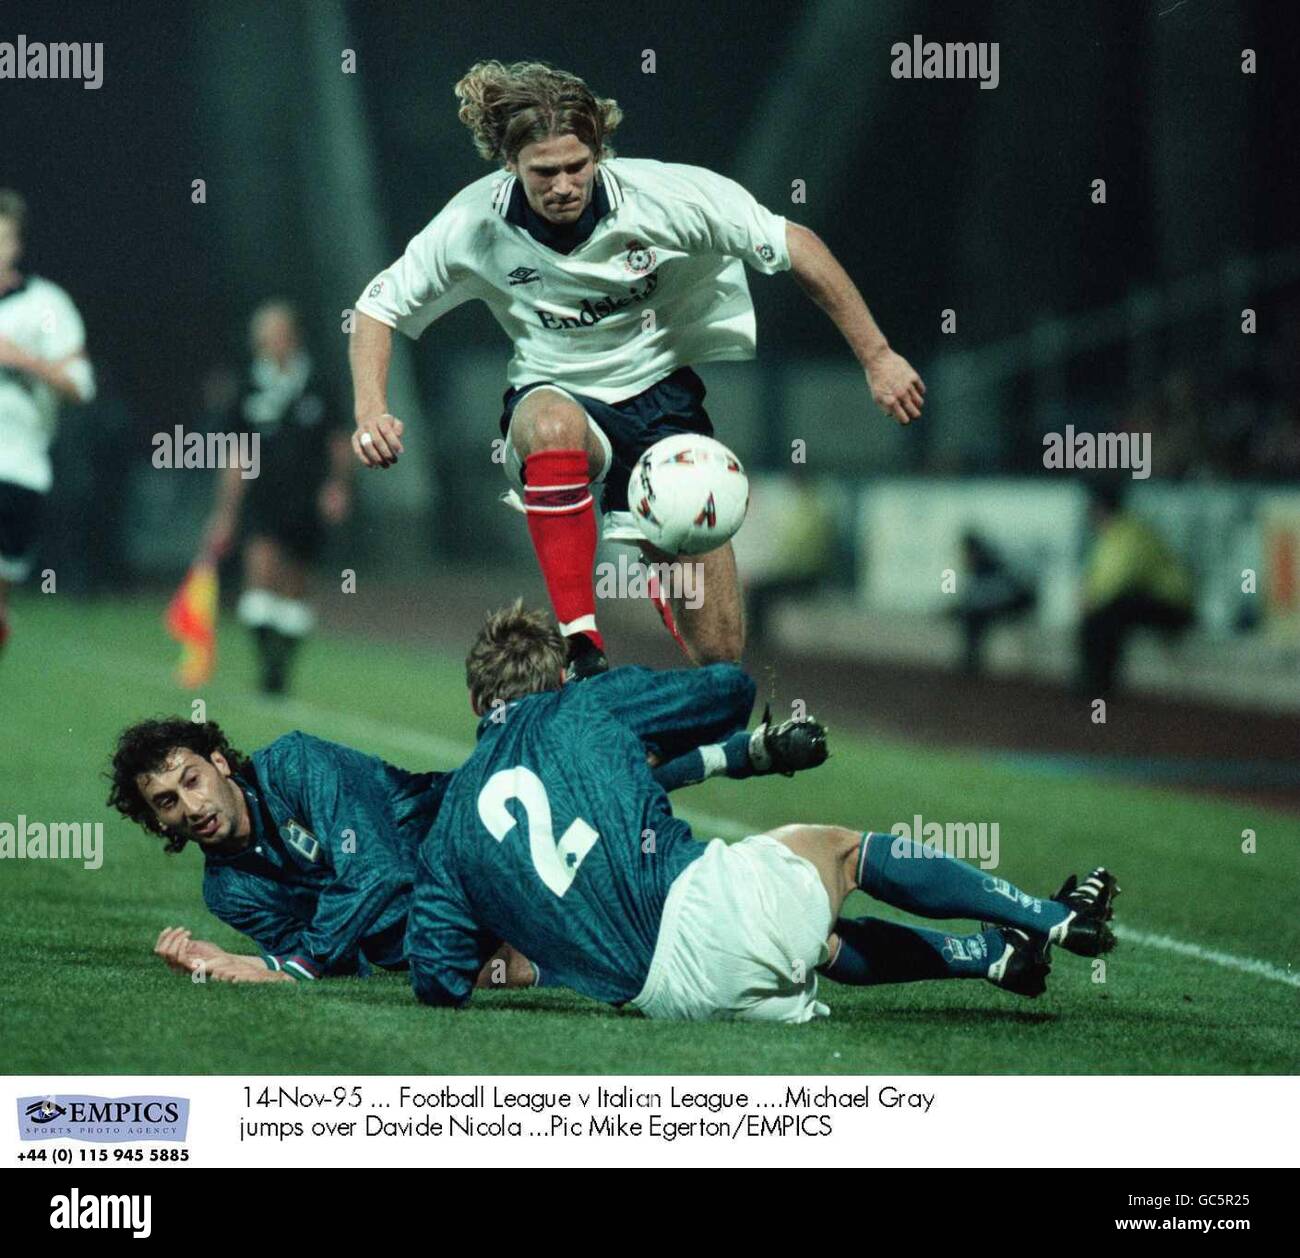 14-Nov-95 ... Campionato di calcio / Lega Italiana ...Michael Grey salta su Davide Nicola Foto Stock